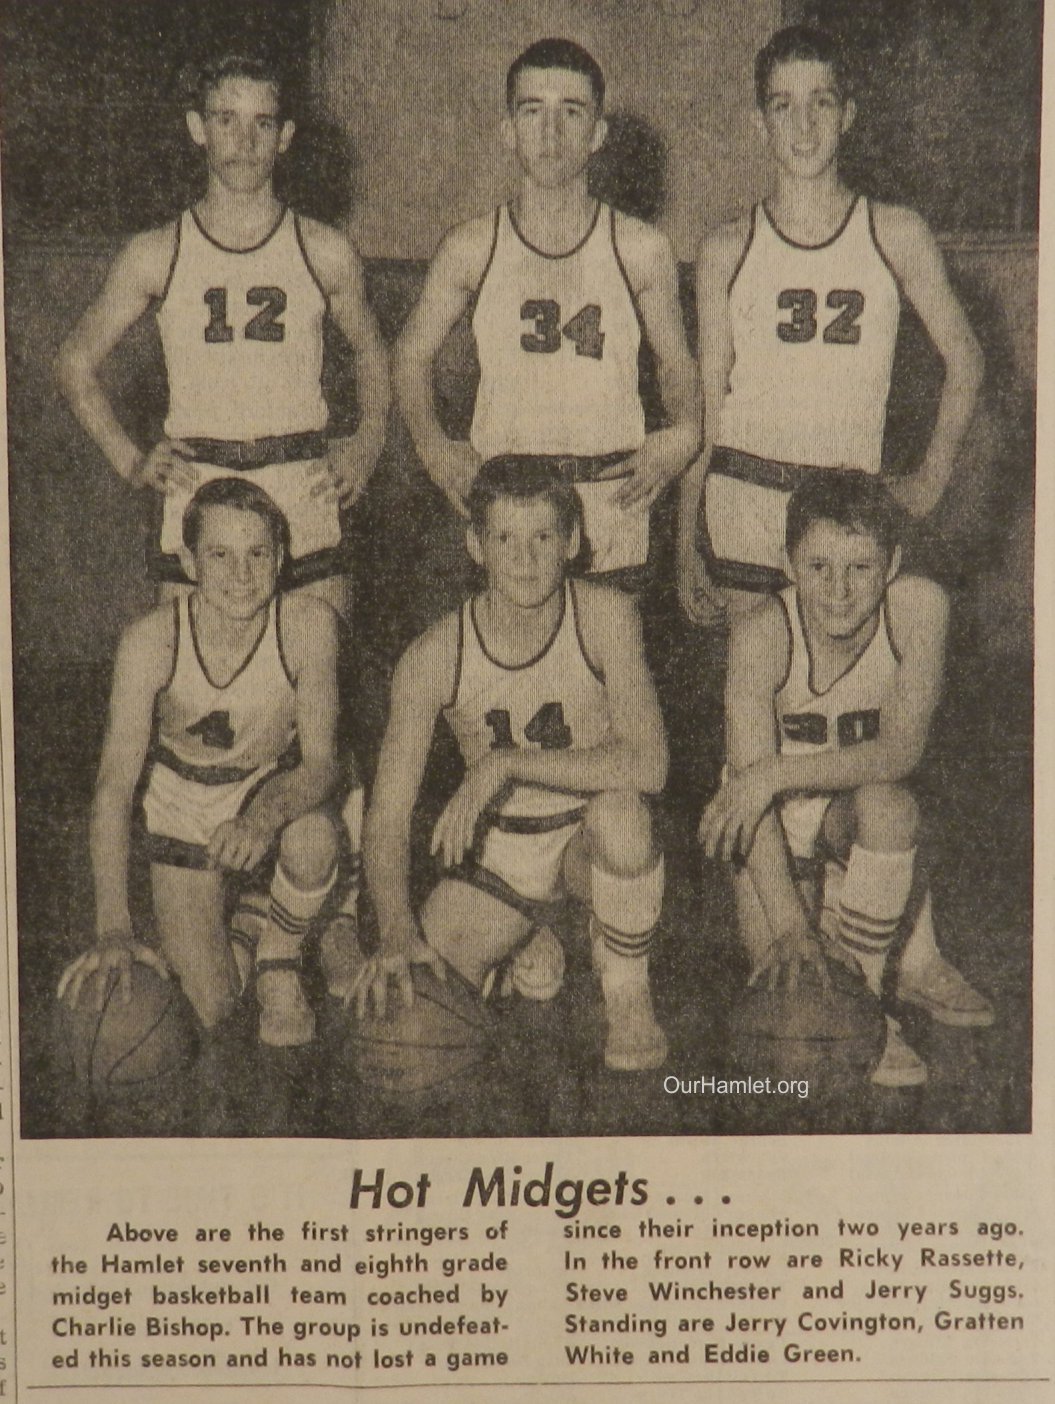 1964 Hot Midgets OH.jpg